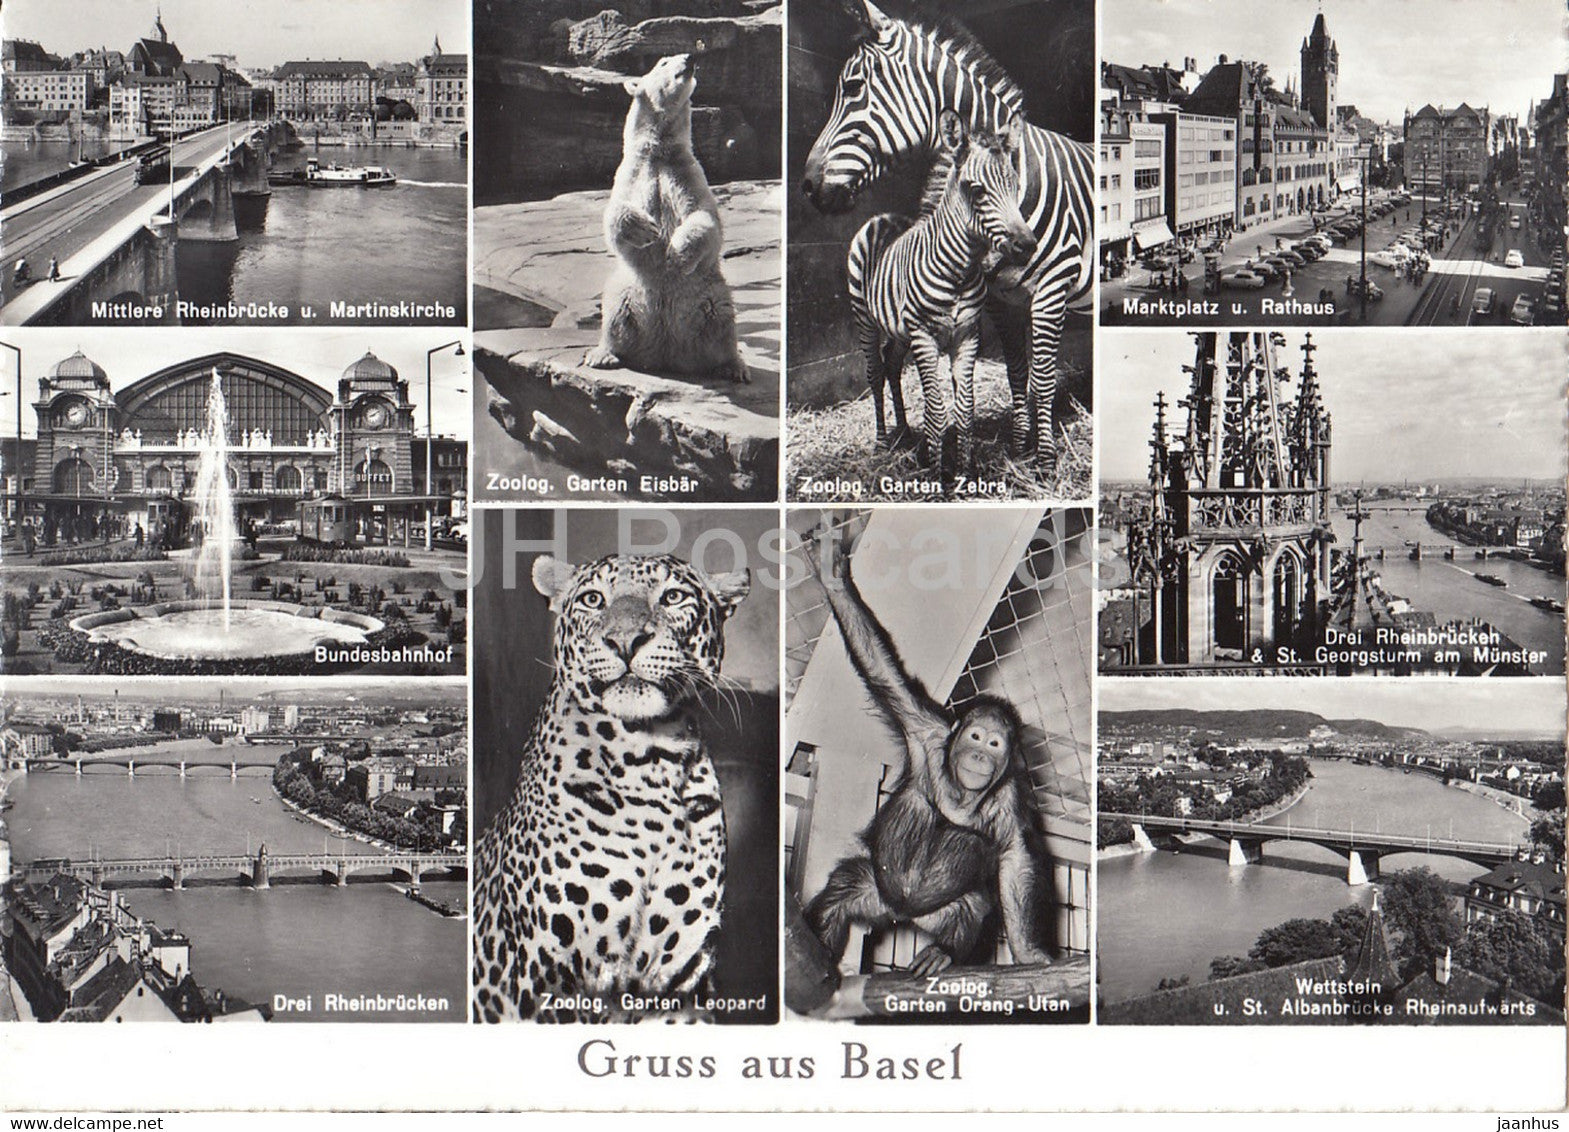 Basle - Gruss aus Basel - Mittlere Rheinbrucke - Zoo - monkey - polar bear - Zebra - leopard - Switzerland - unused - JH Postcards